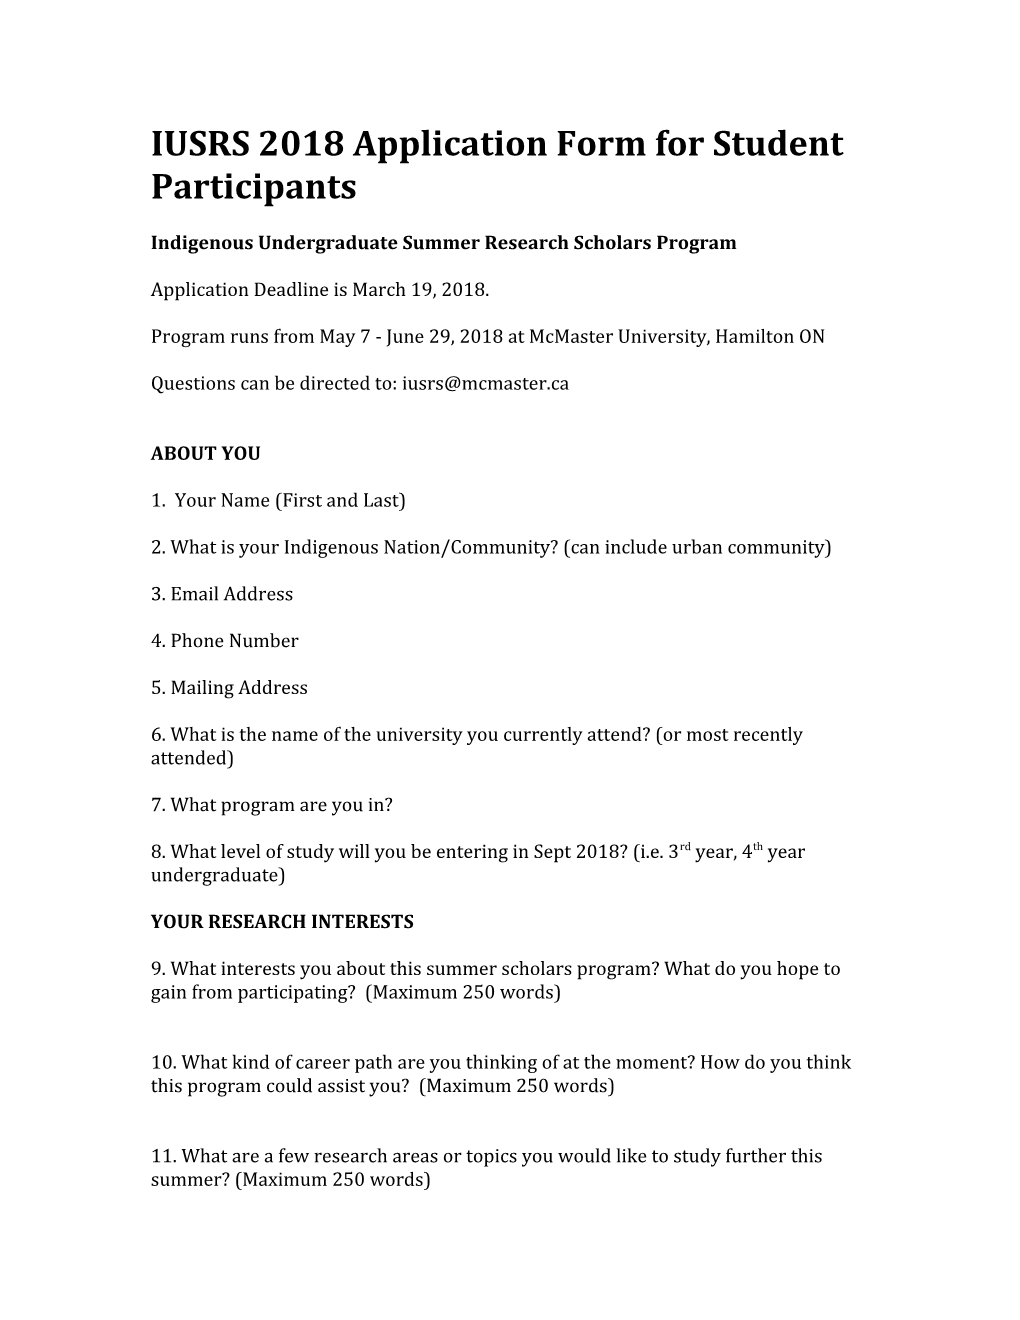 IUSRS 2018Application Form for Student Participants